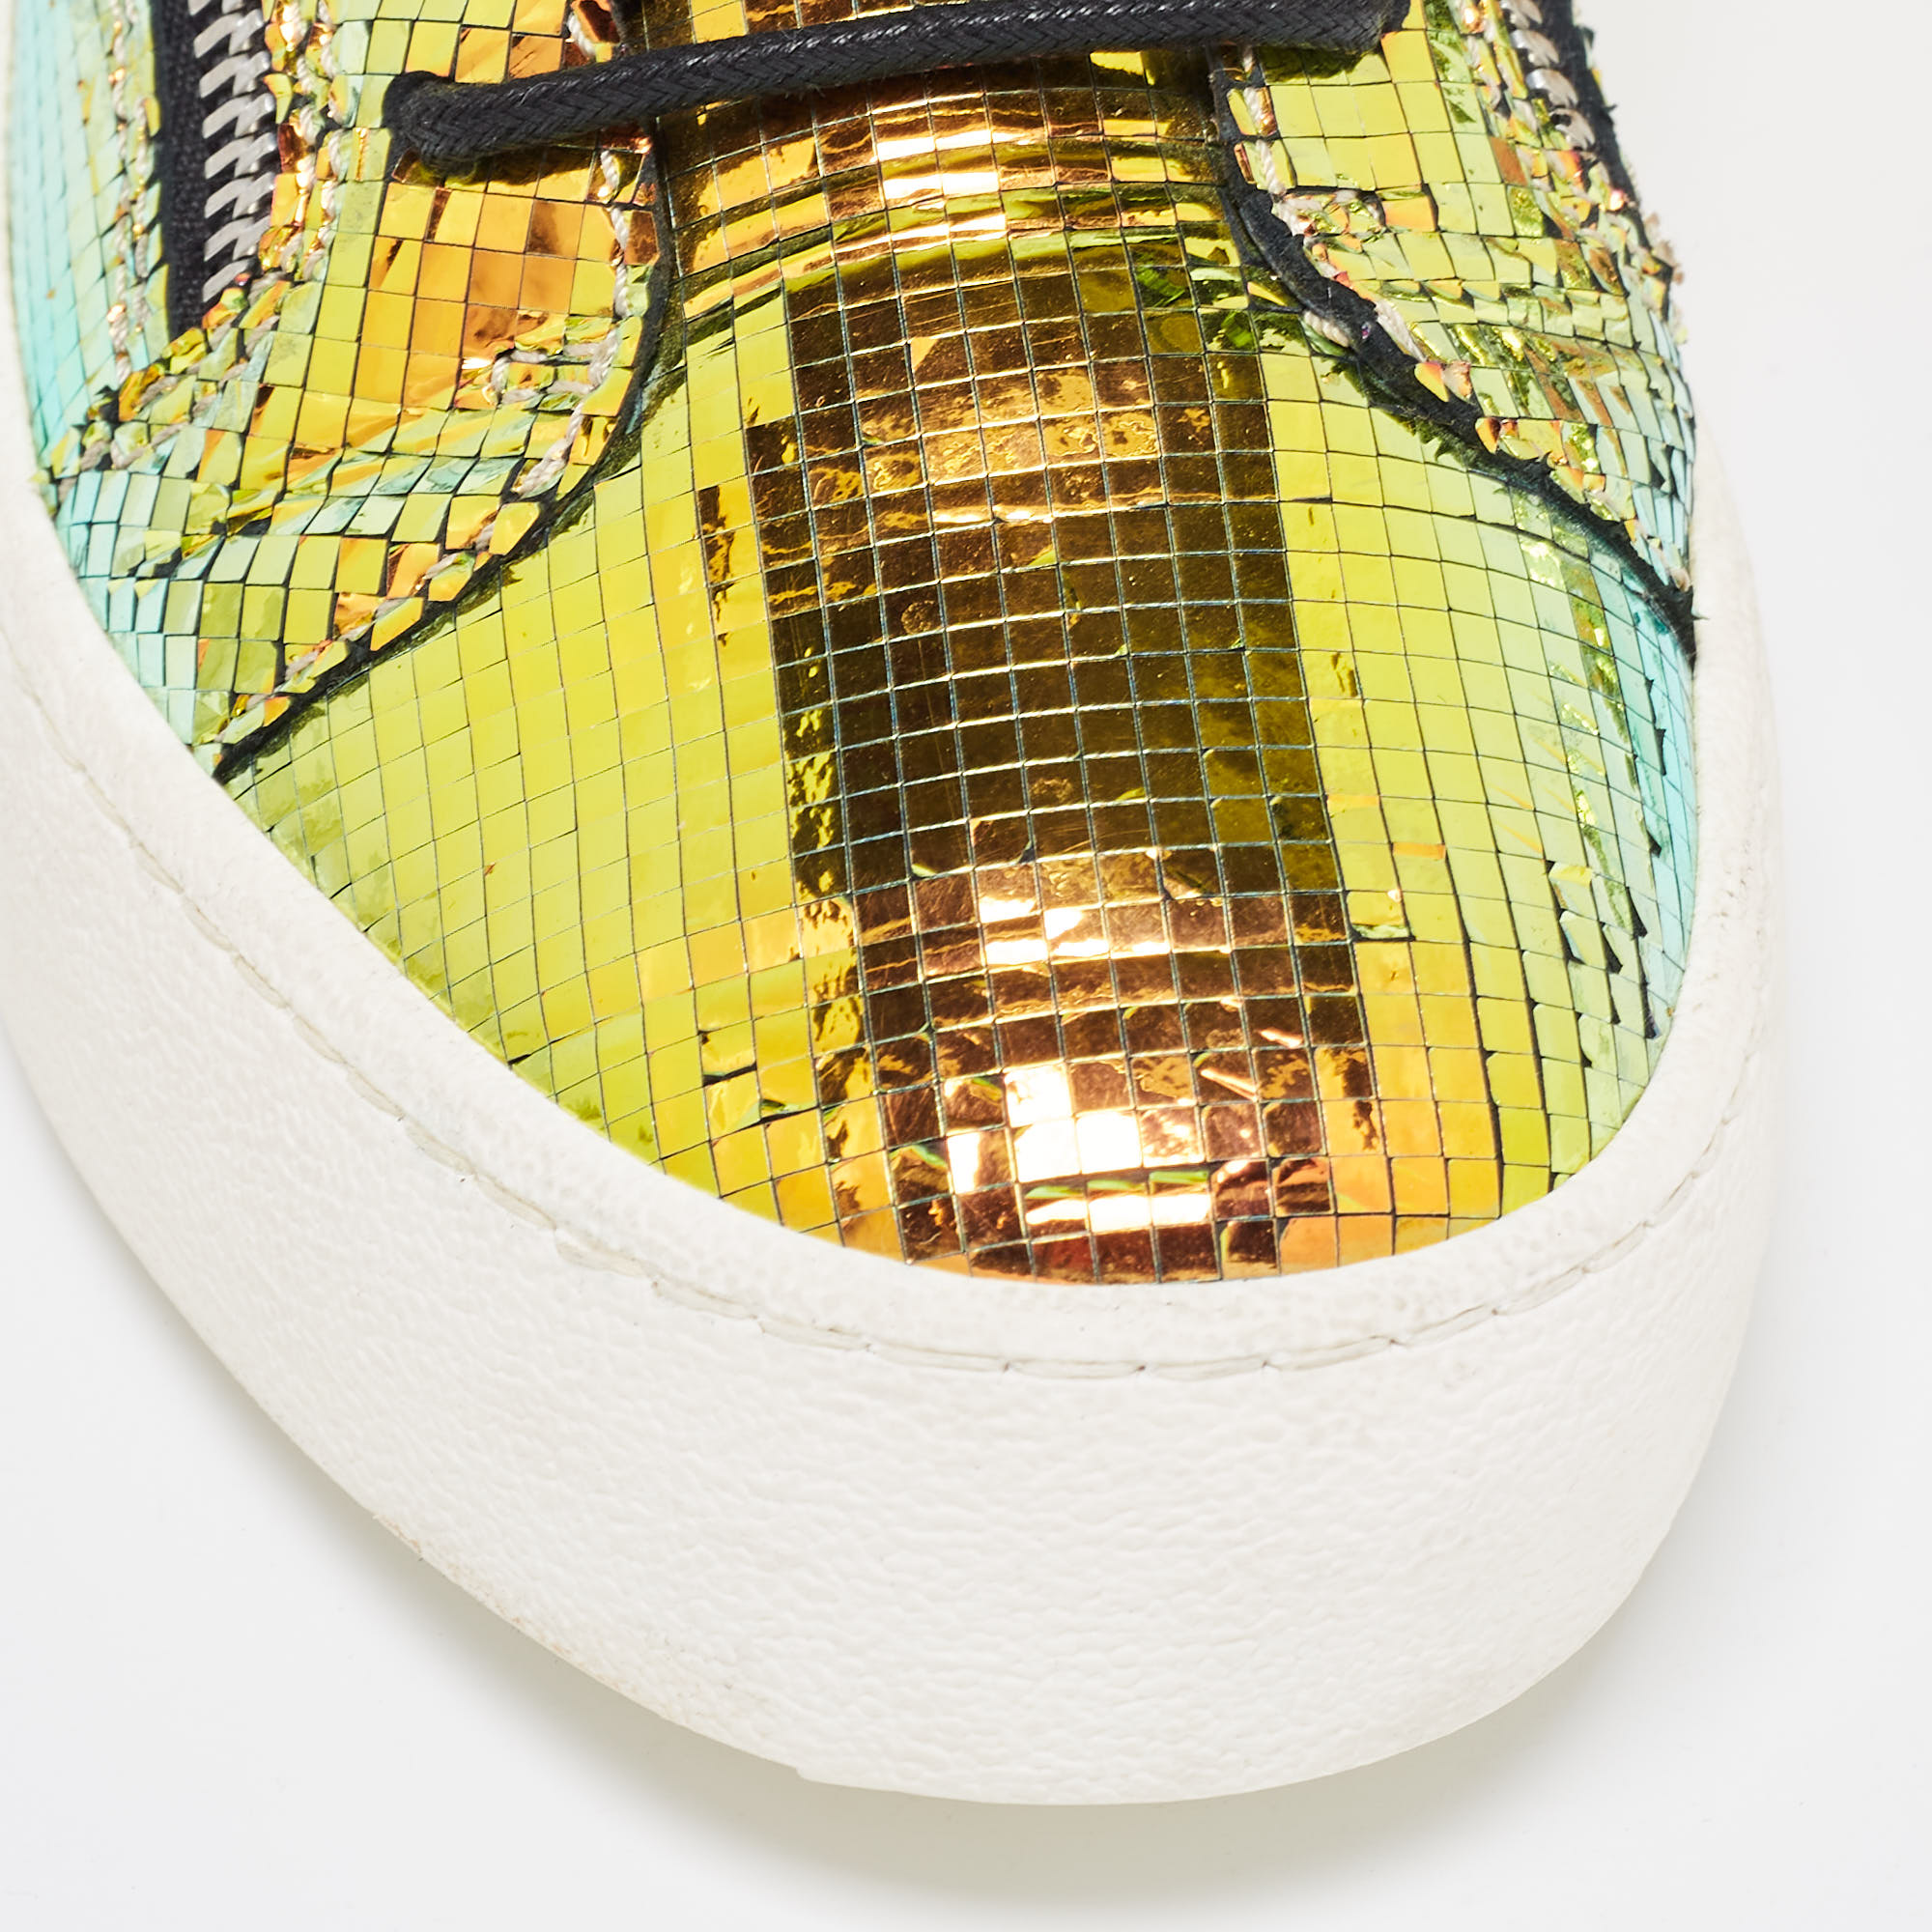 Giuseppe Zanotti Multicolor Foil Leather High Top Sneakers Size 41